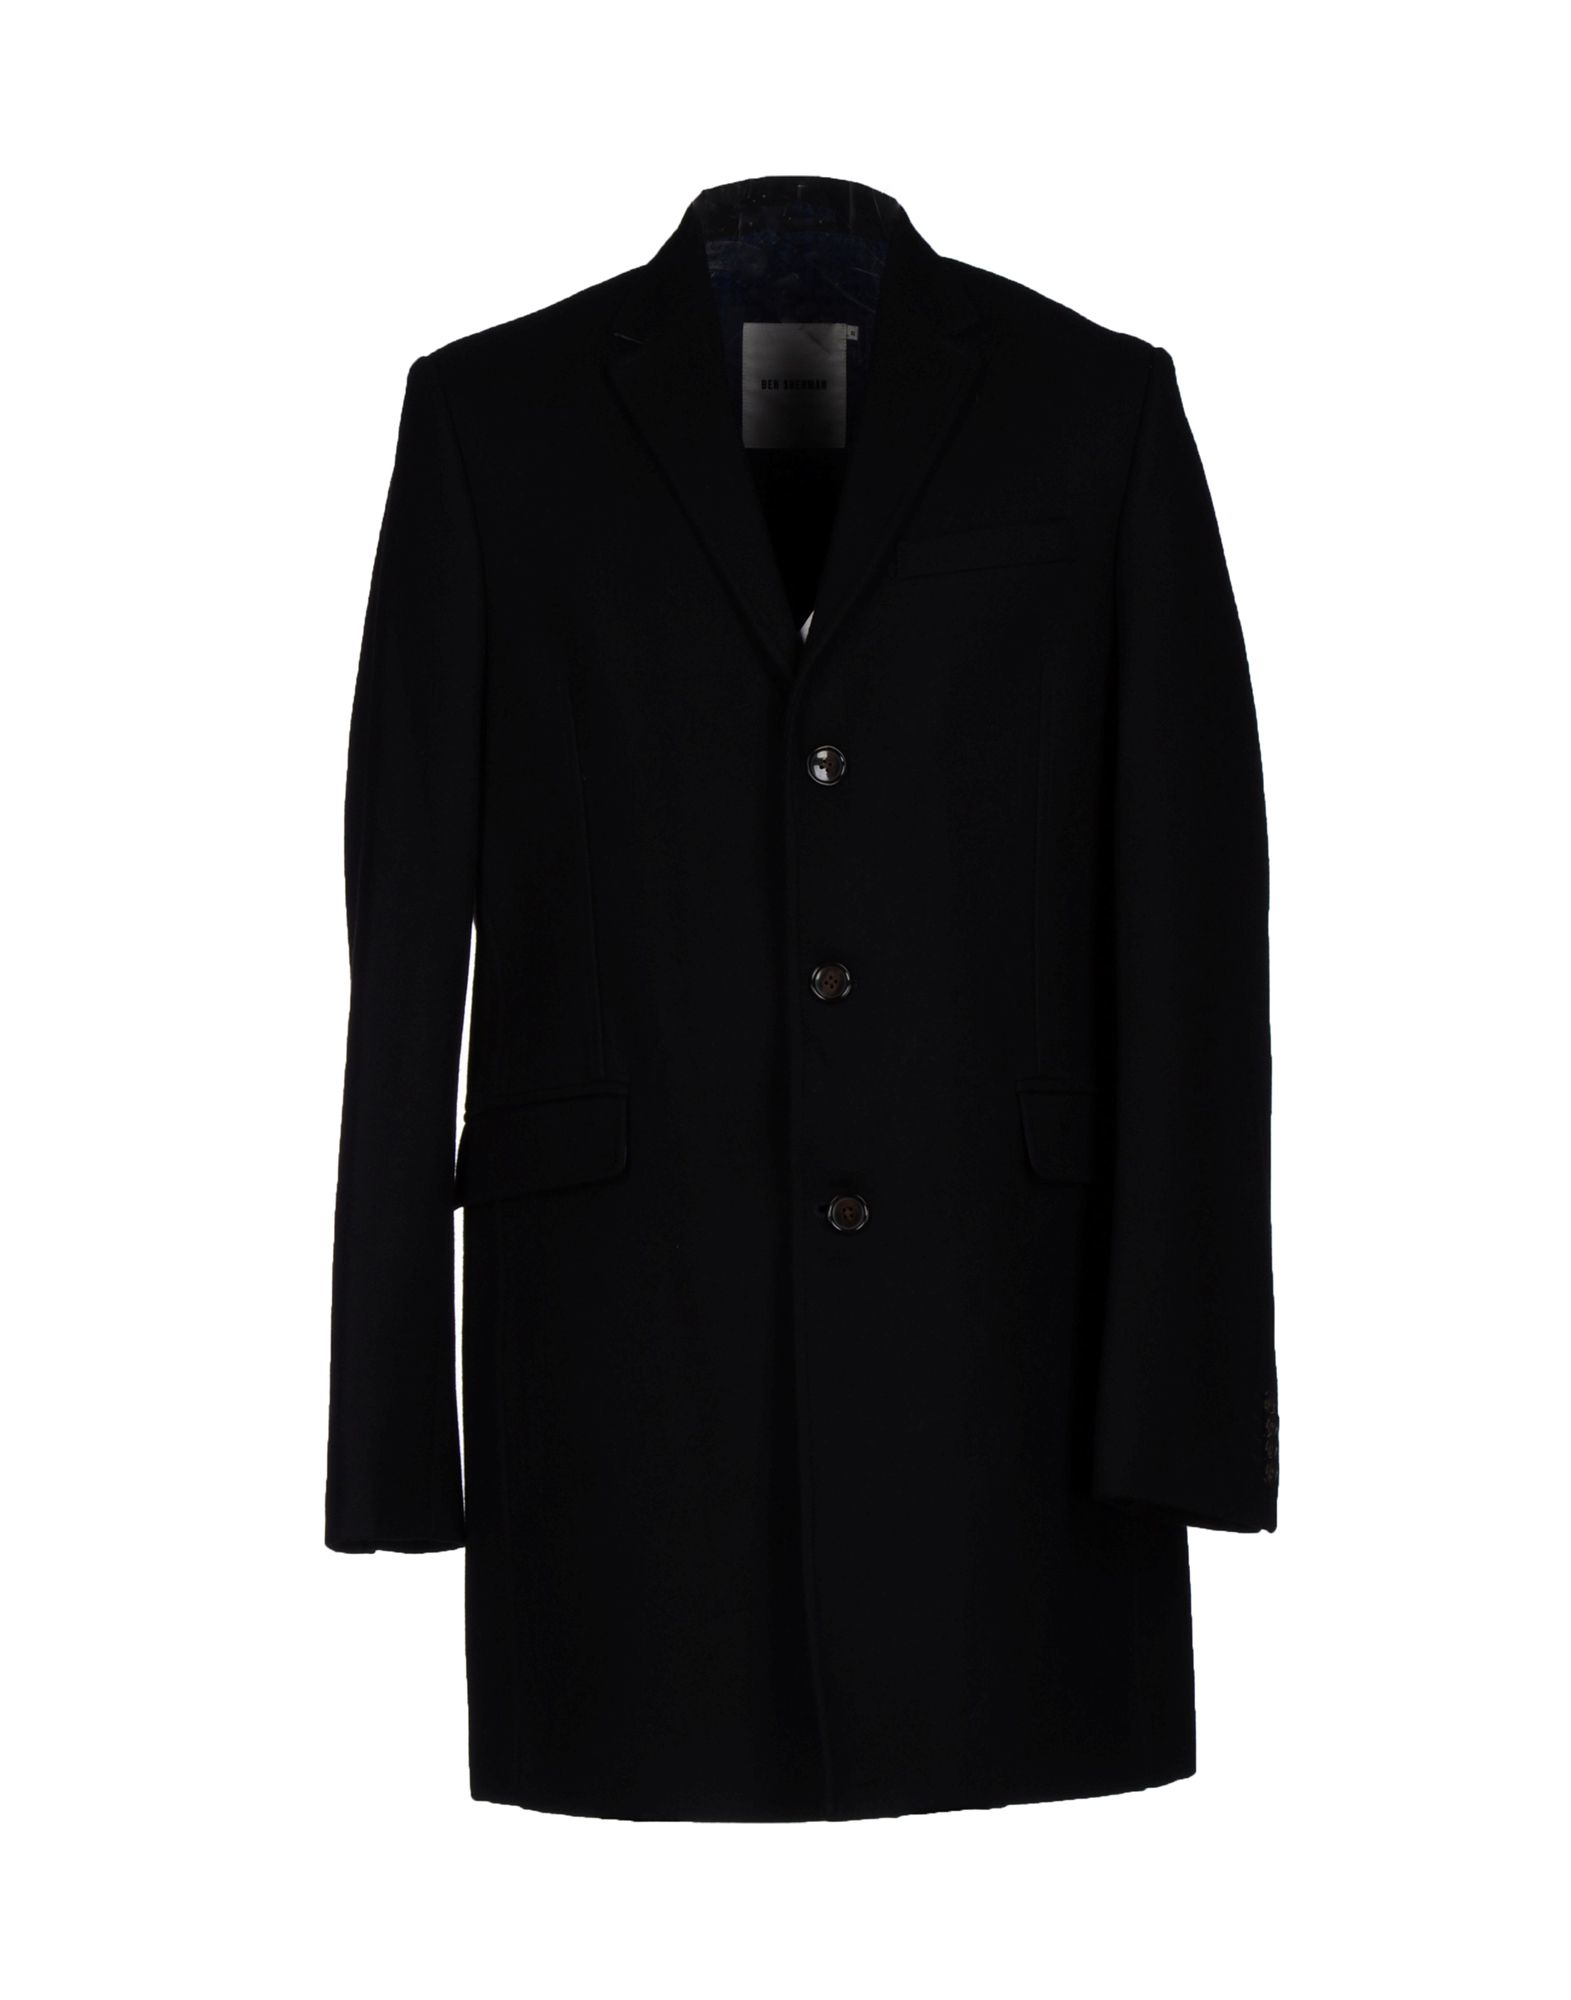 Lyst - Ben Sherman Coat in Black for Men